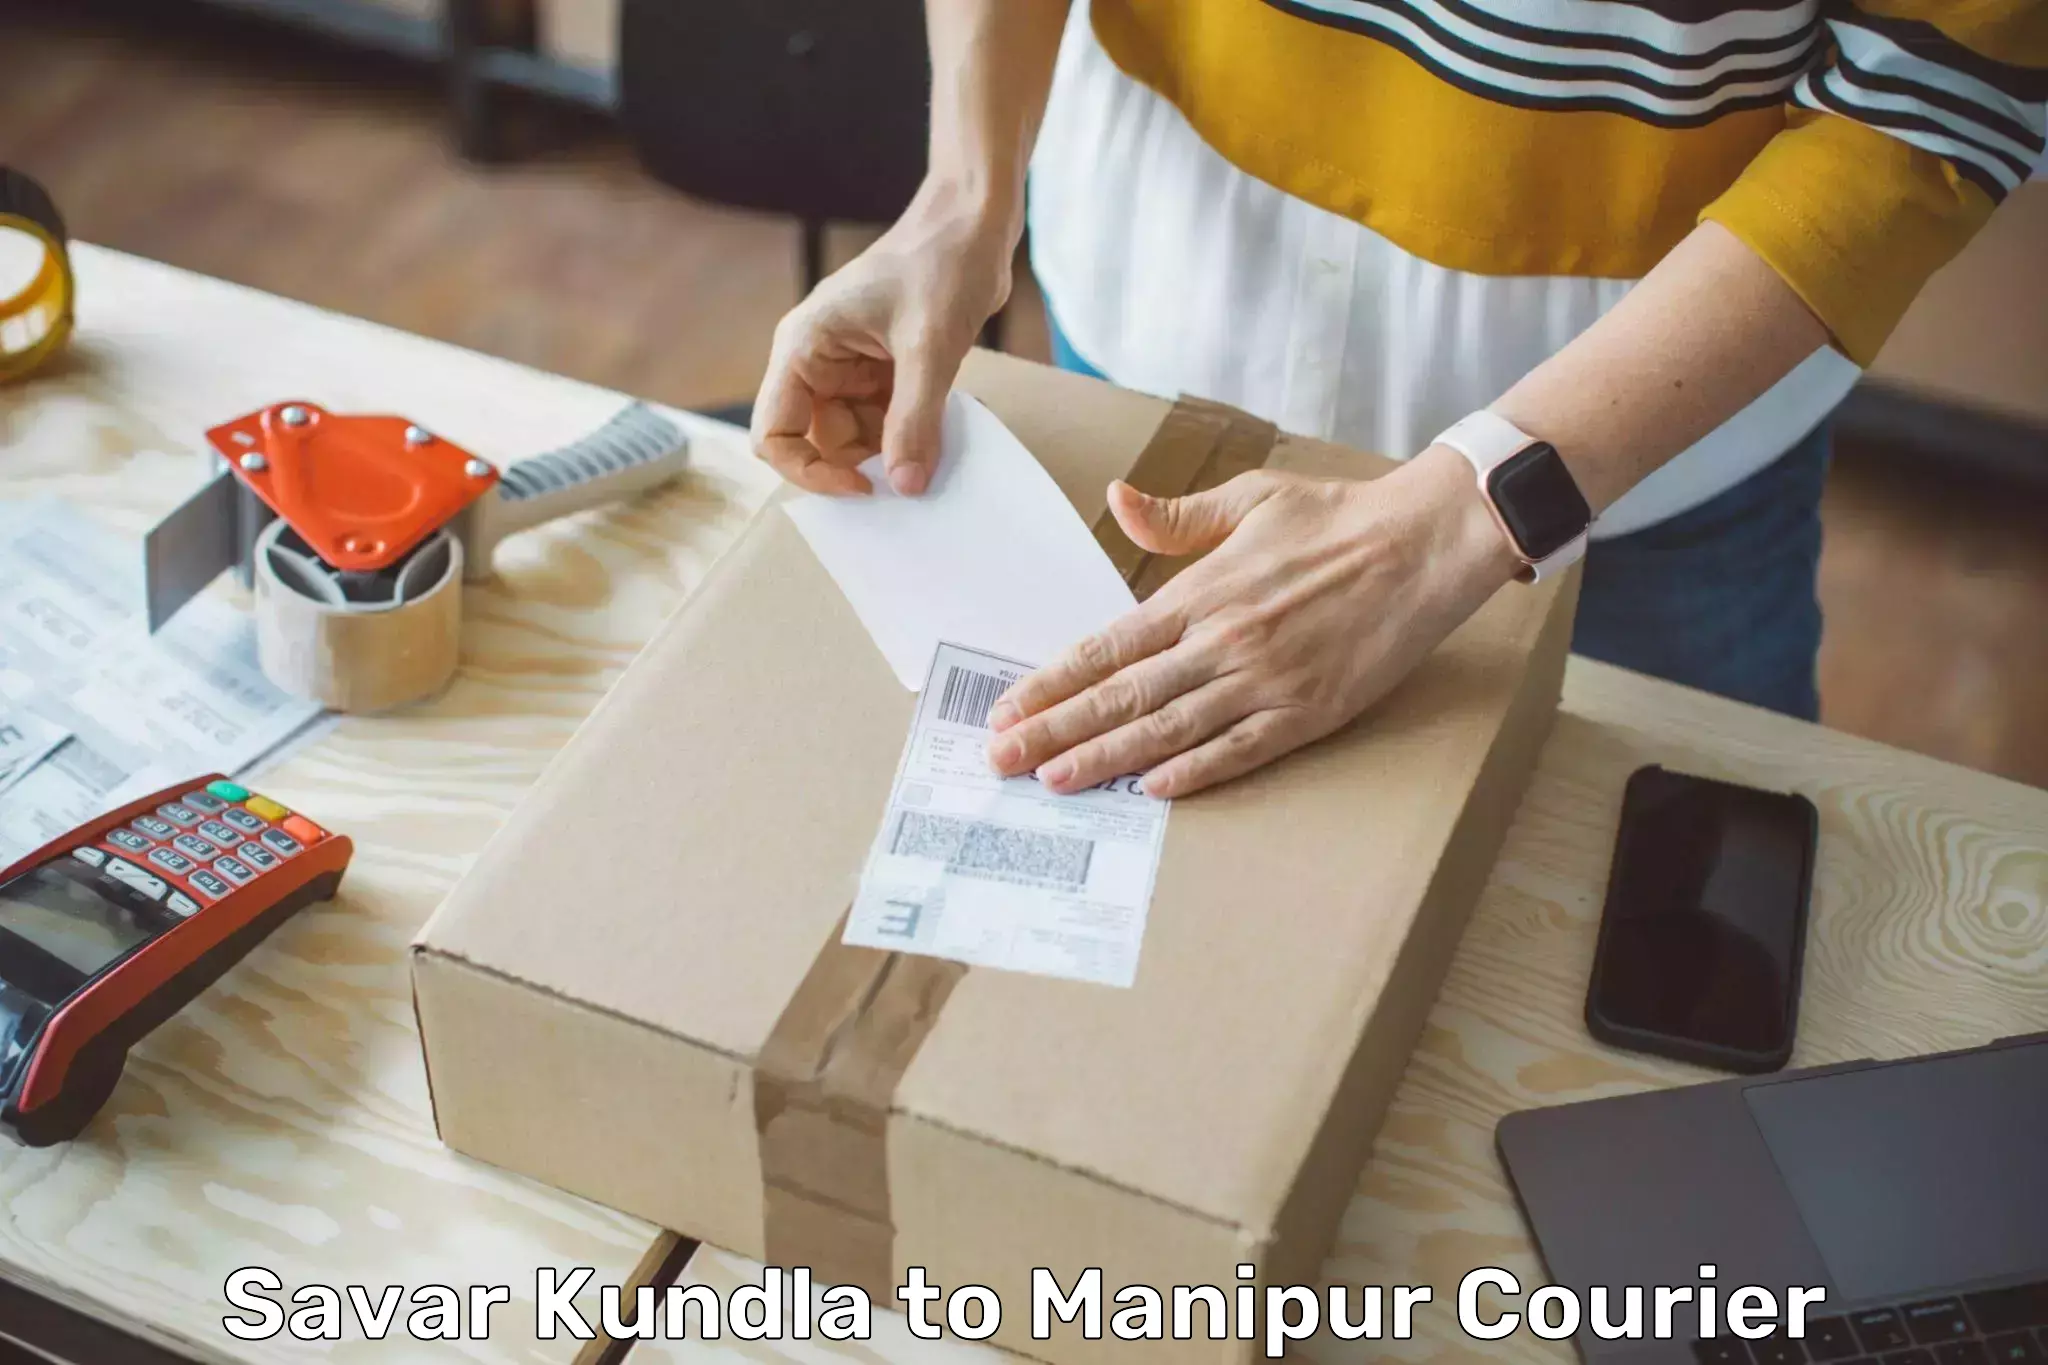 Modern delivery technologies Savar Kundla to Manipur